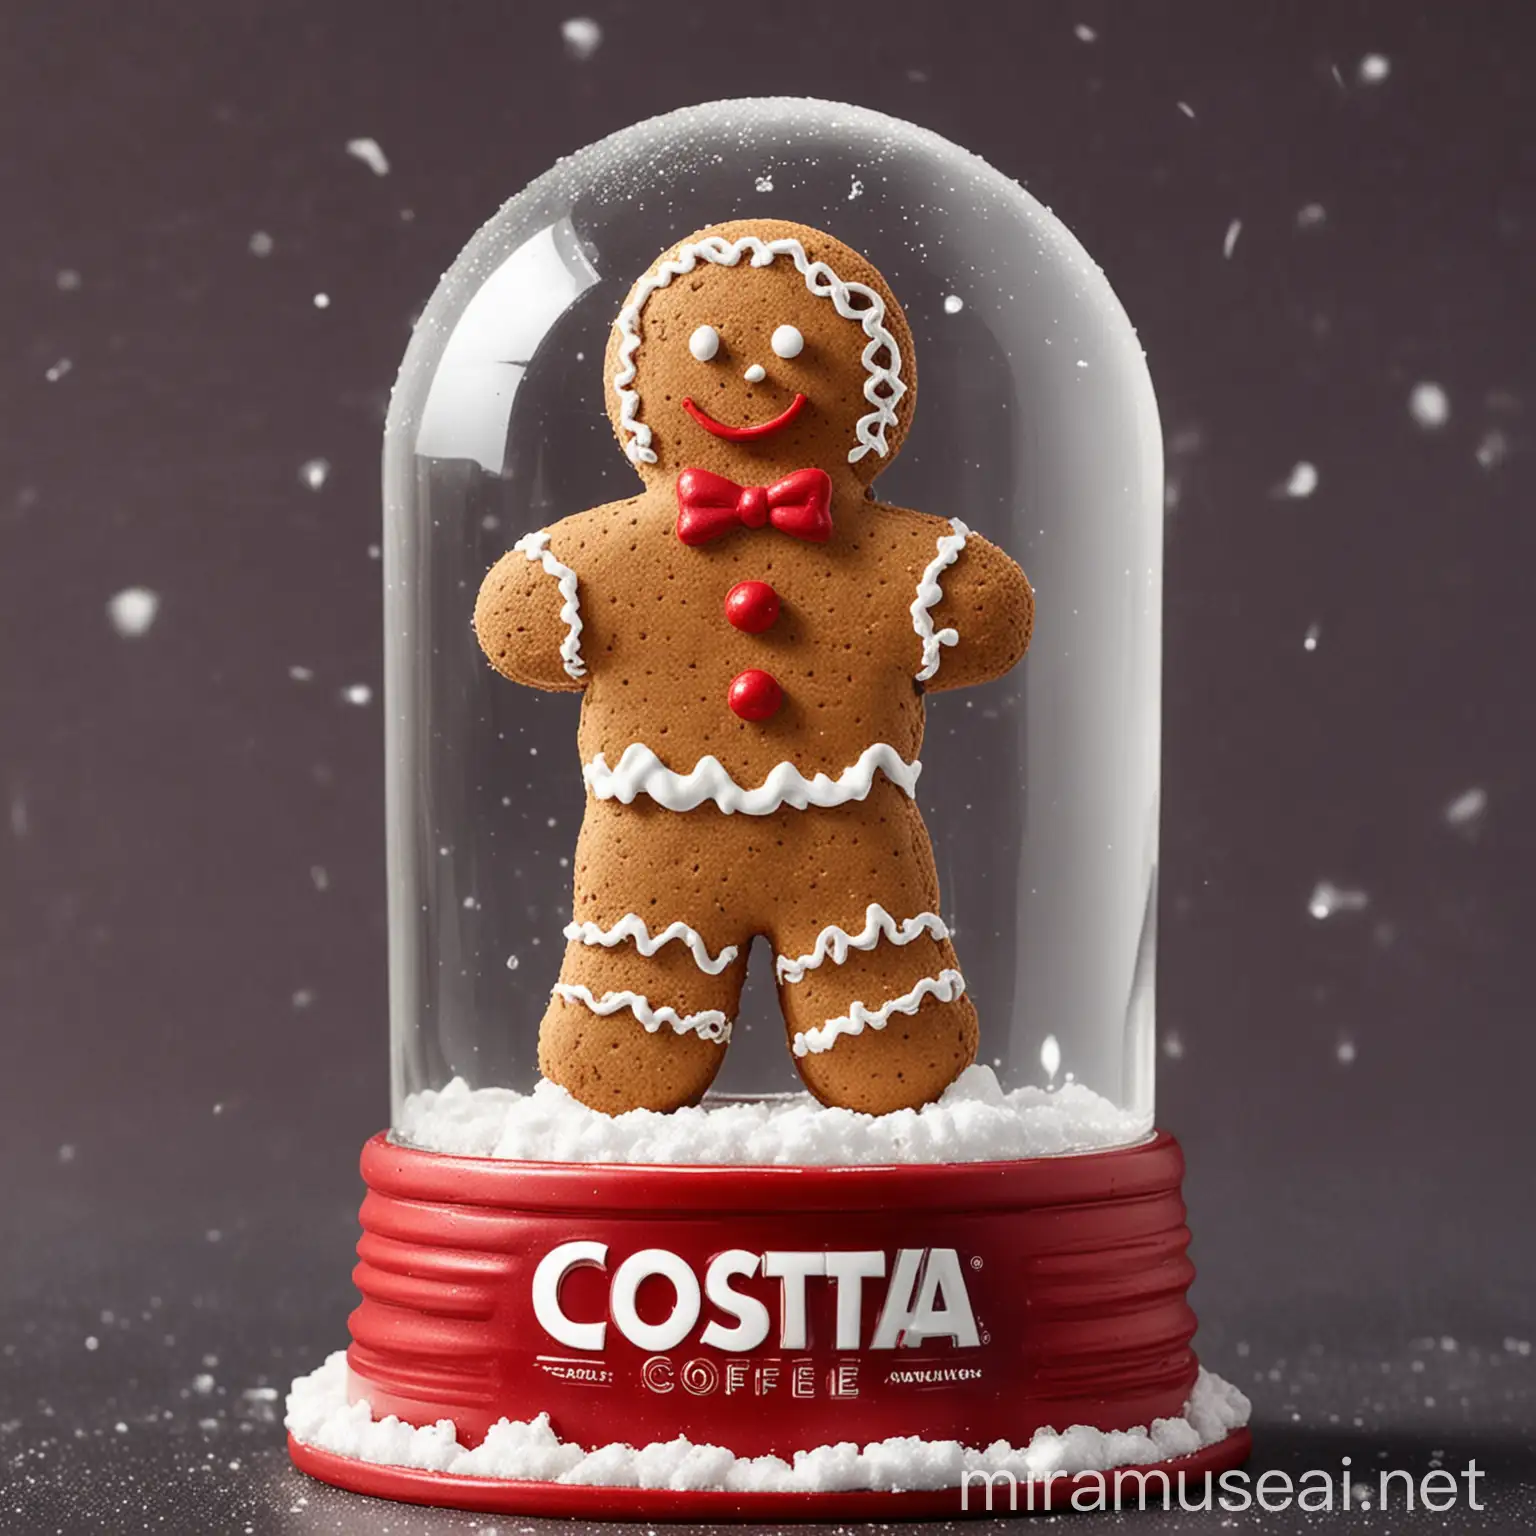 Costa Coffee Themed Gingerbread Man Adorning Snowglobe